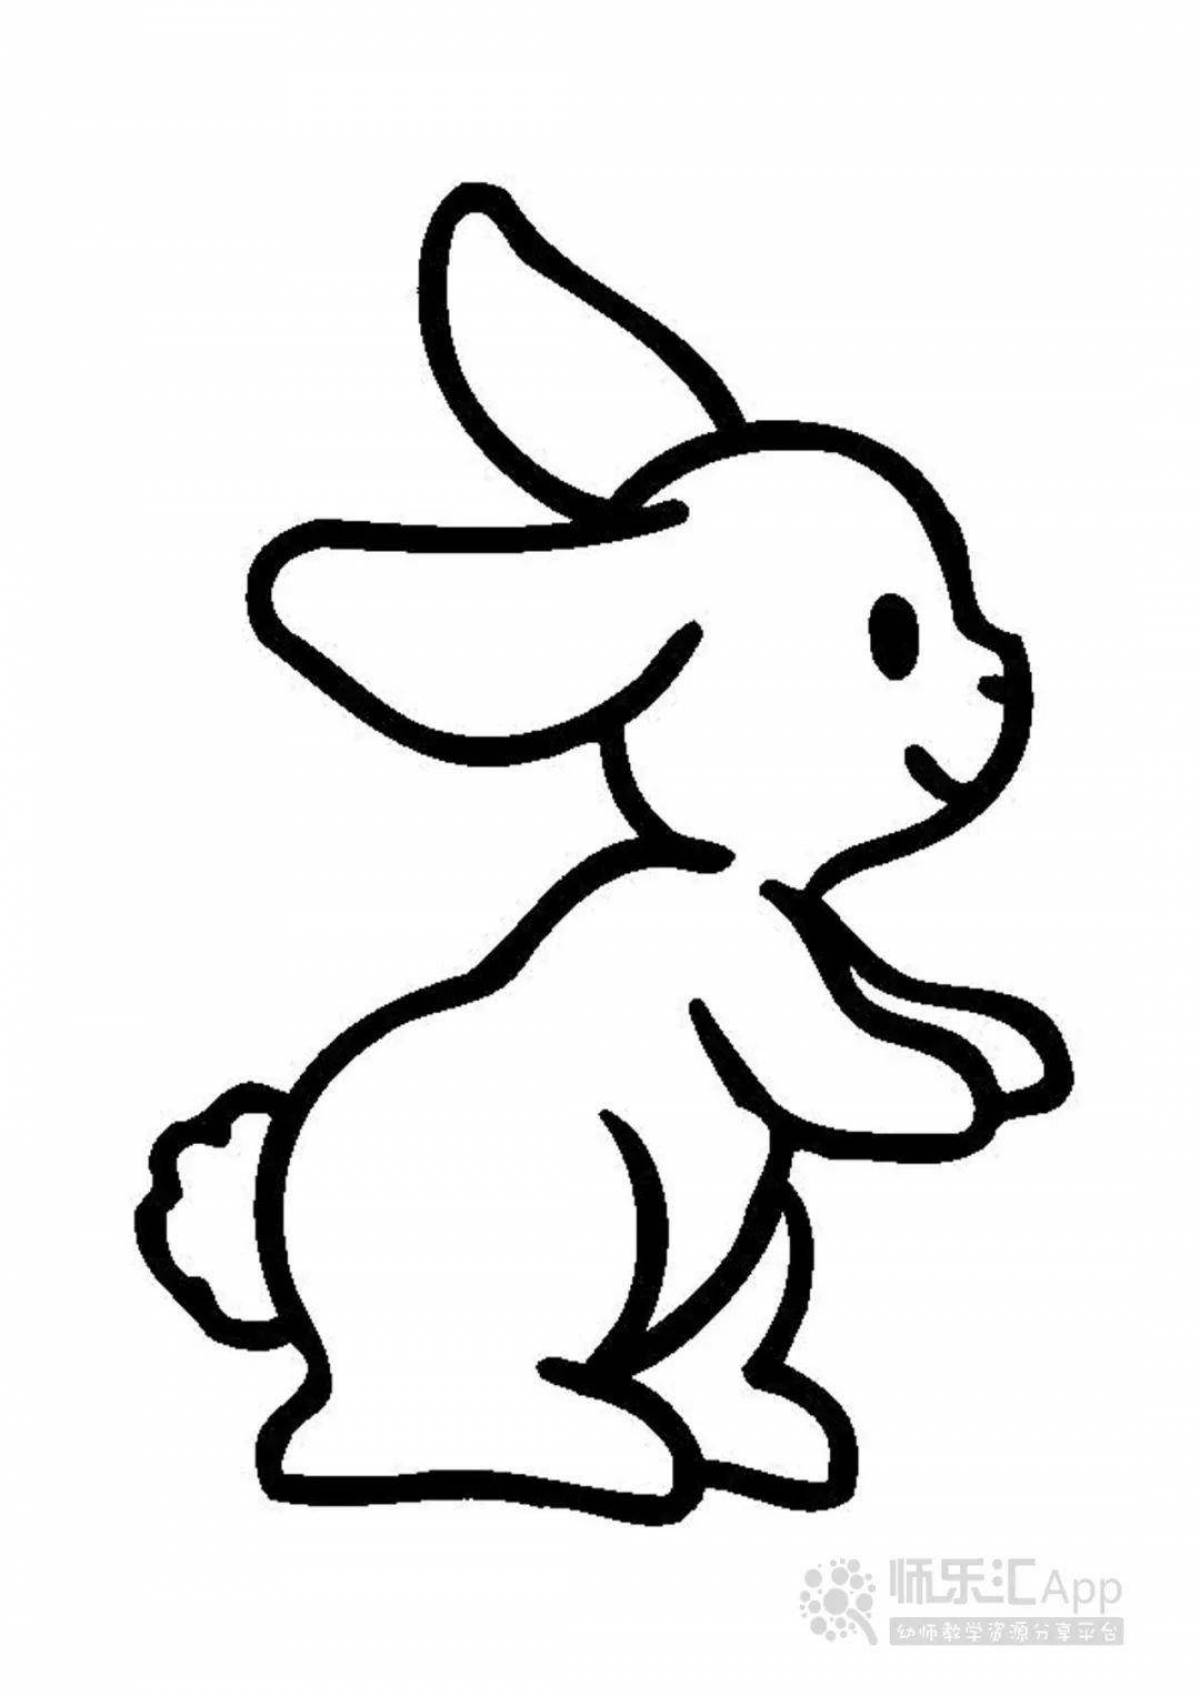 Flexible rabbit jumper